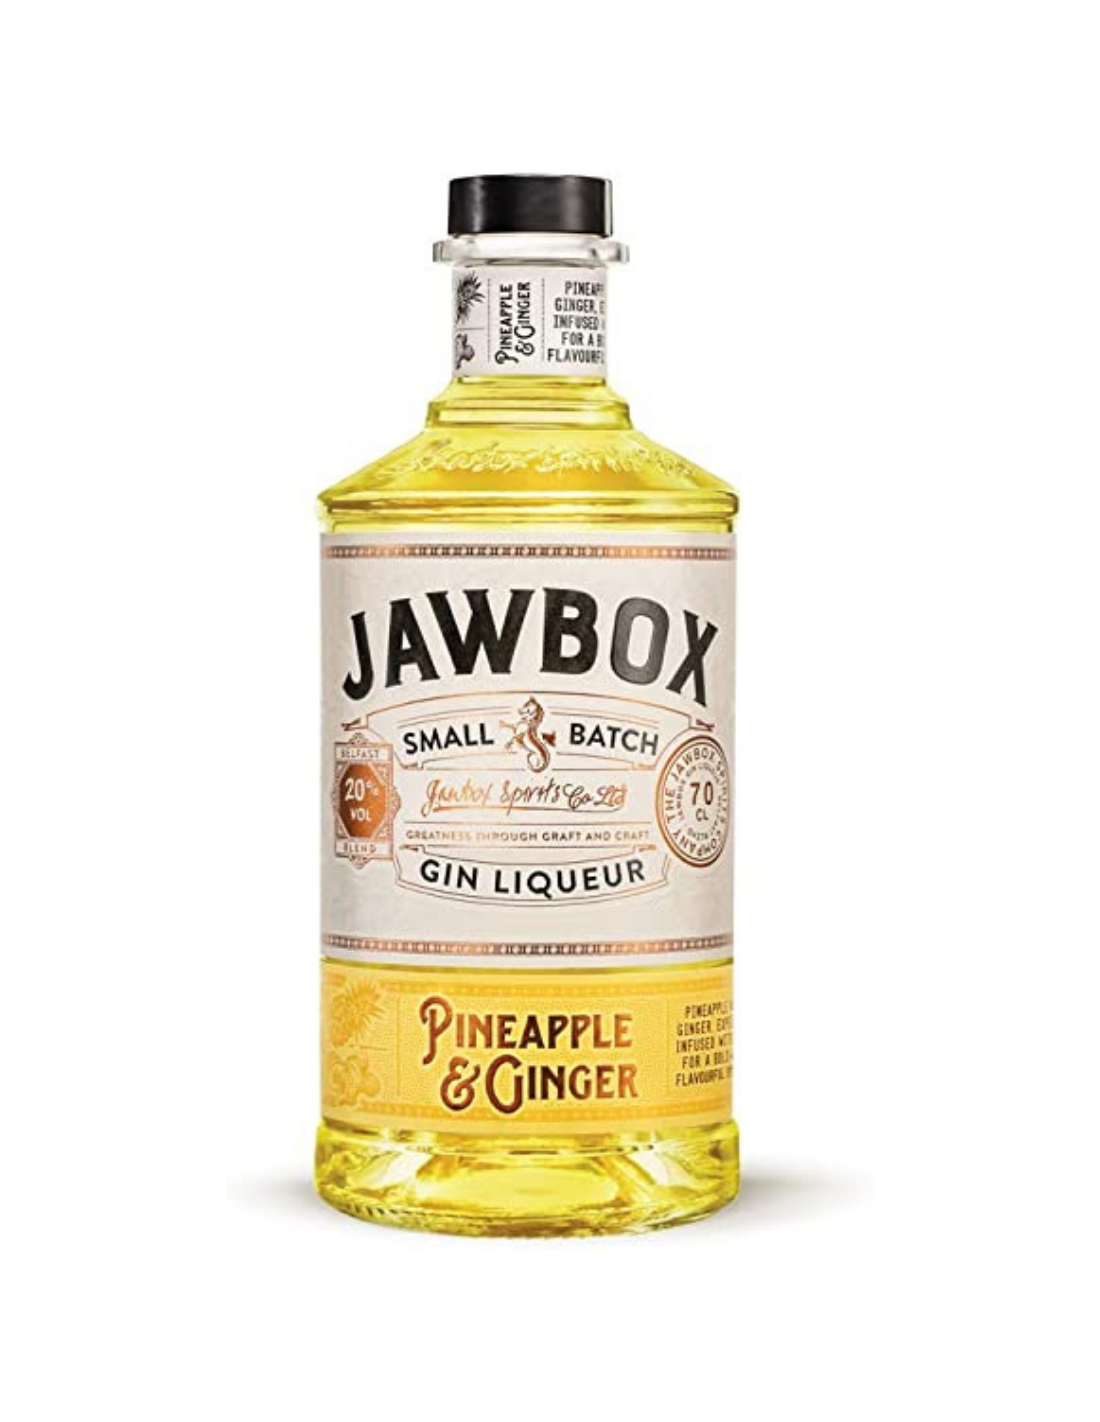 Lichior de gin Jawbox Pineapple & Ginger, 20% alc., 0.7L, Irlanda alcooldiscount.ro